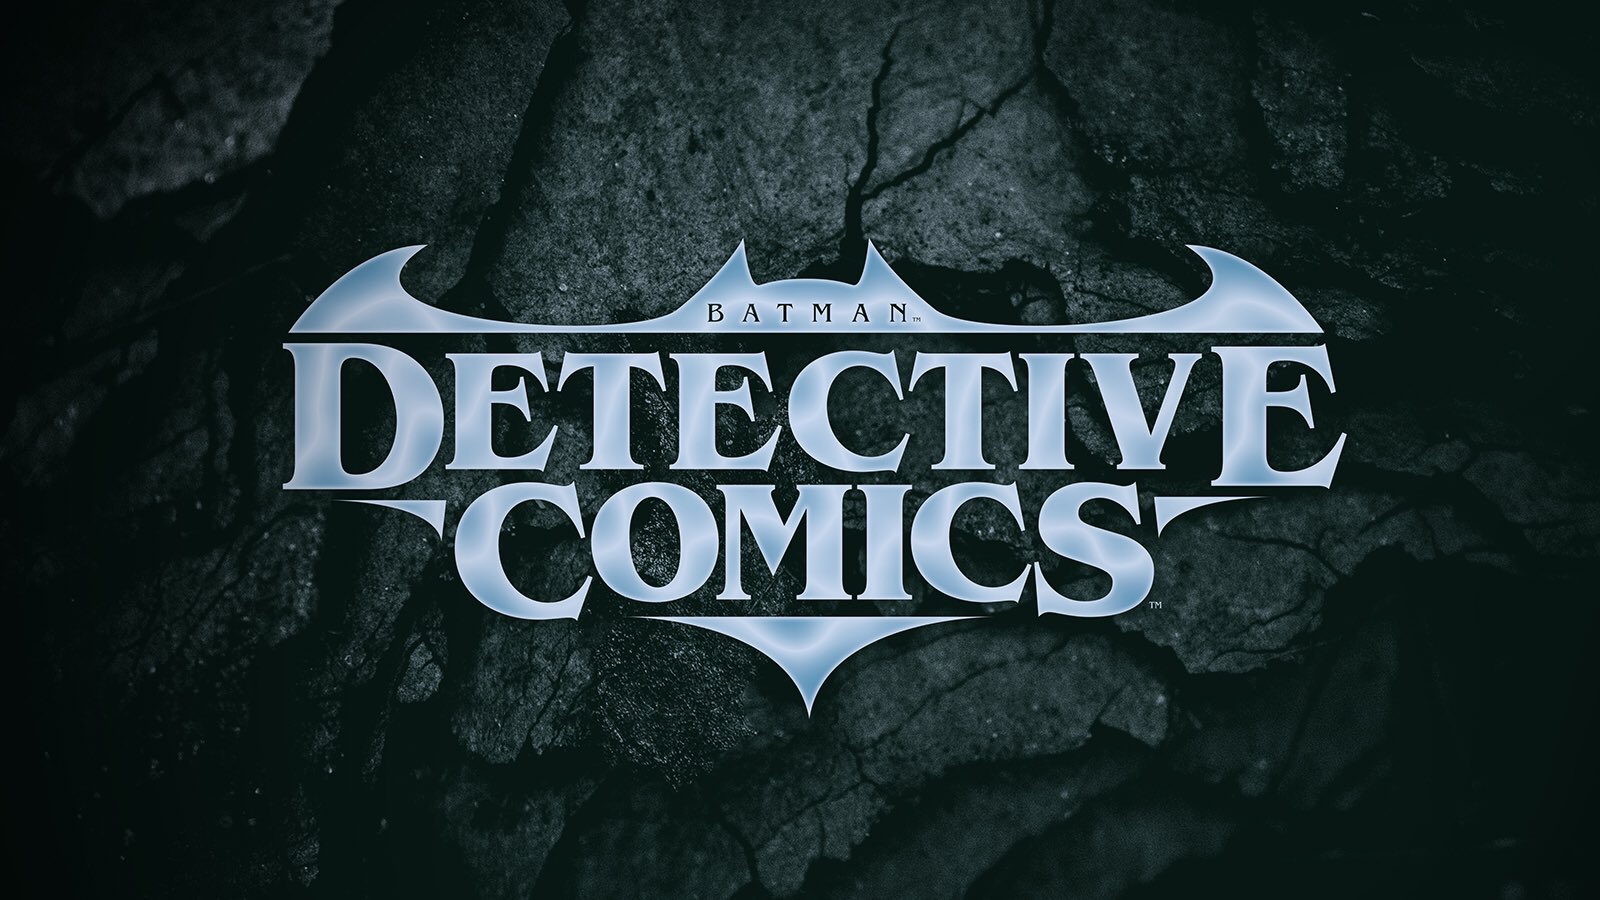 Stunning new Batman logo revealed by DC Comics | Creative Bloq